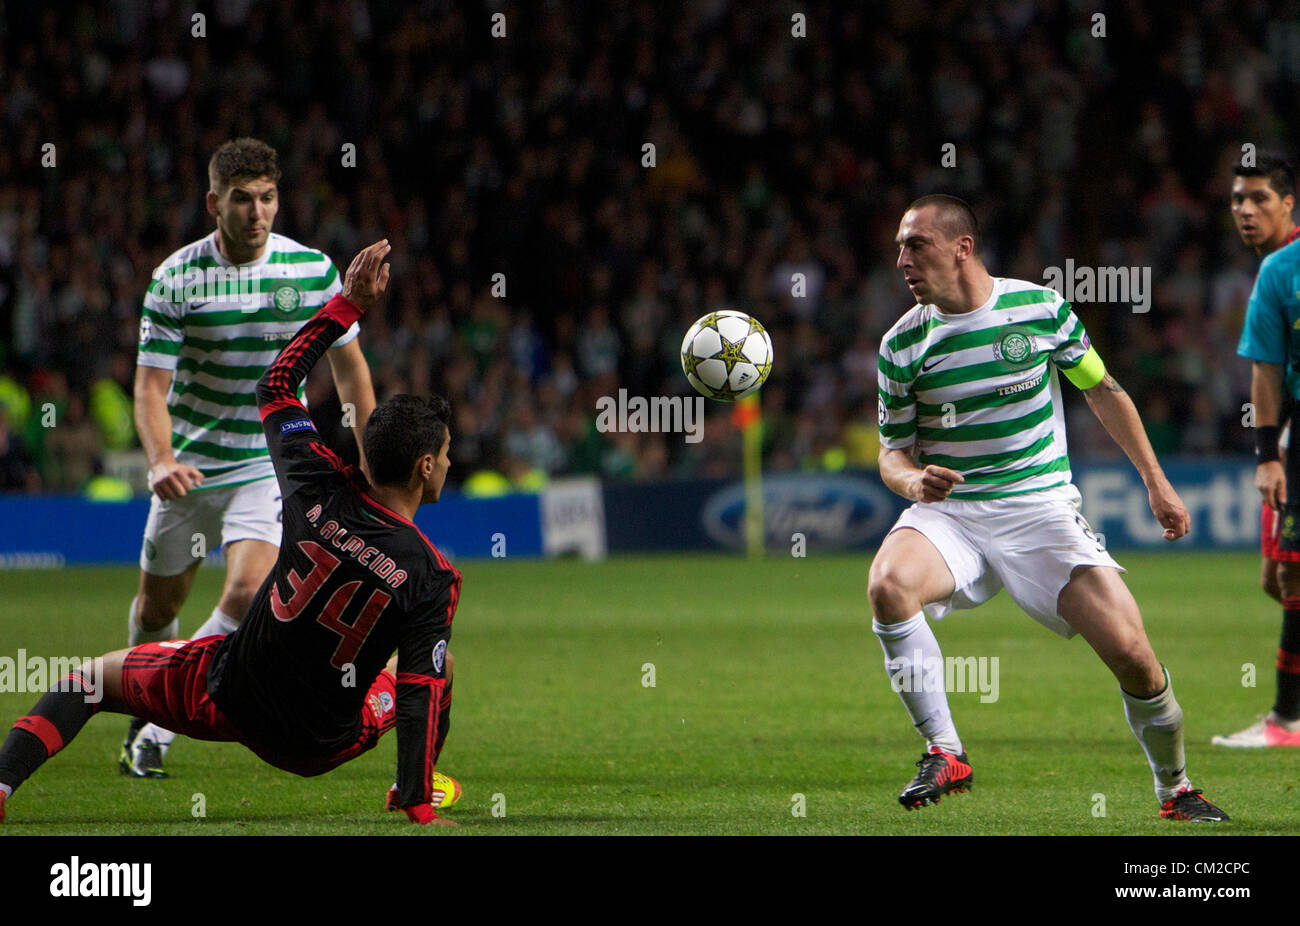 Champions League 2012-13 – The Celtic Wiki